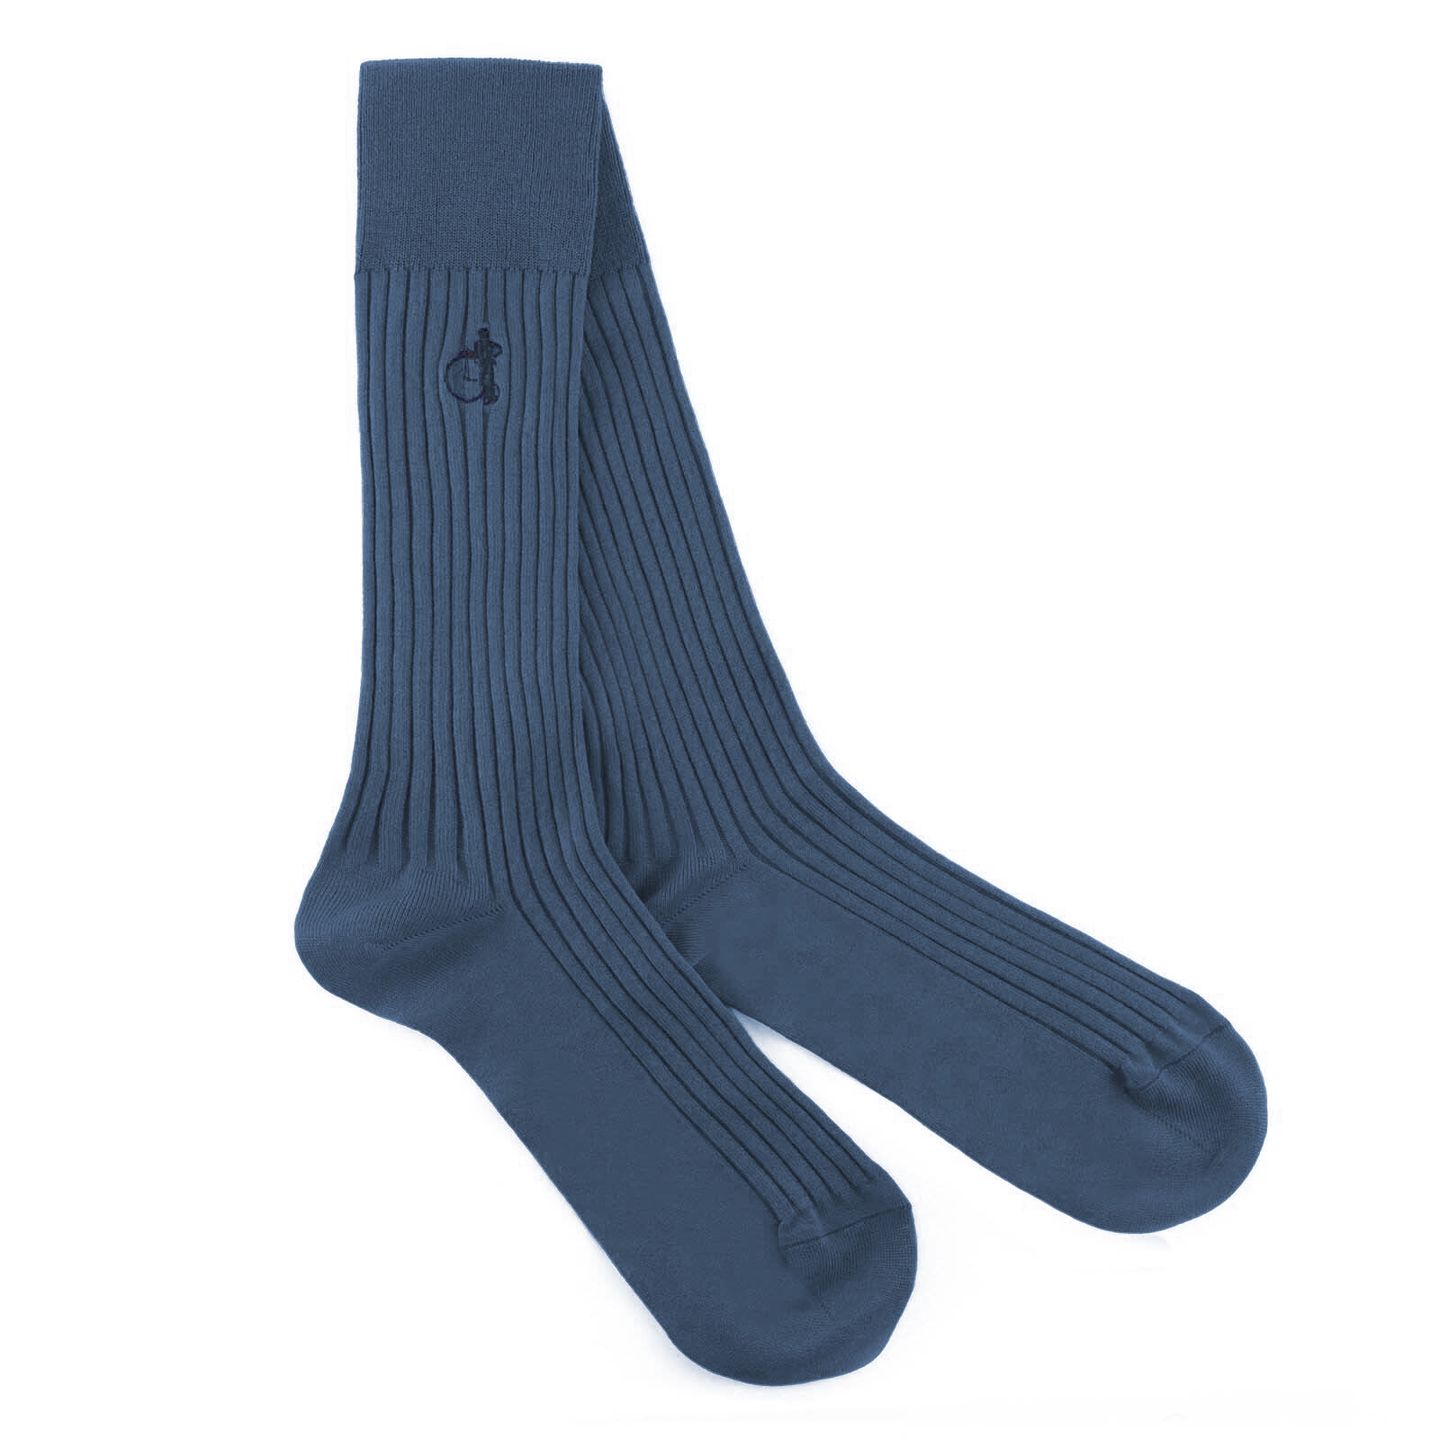 A pair of blue socks